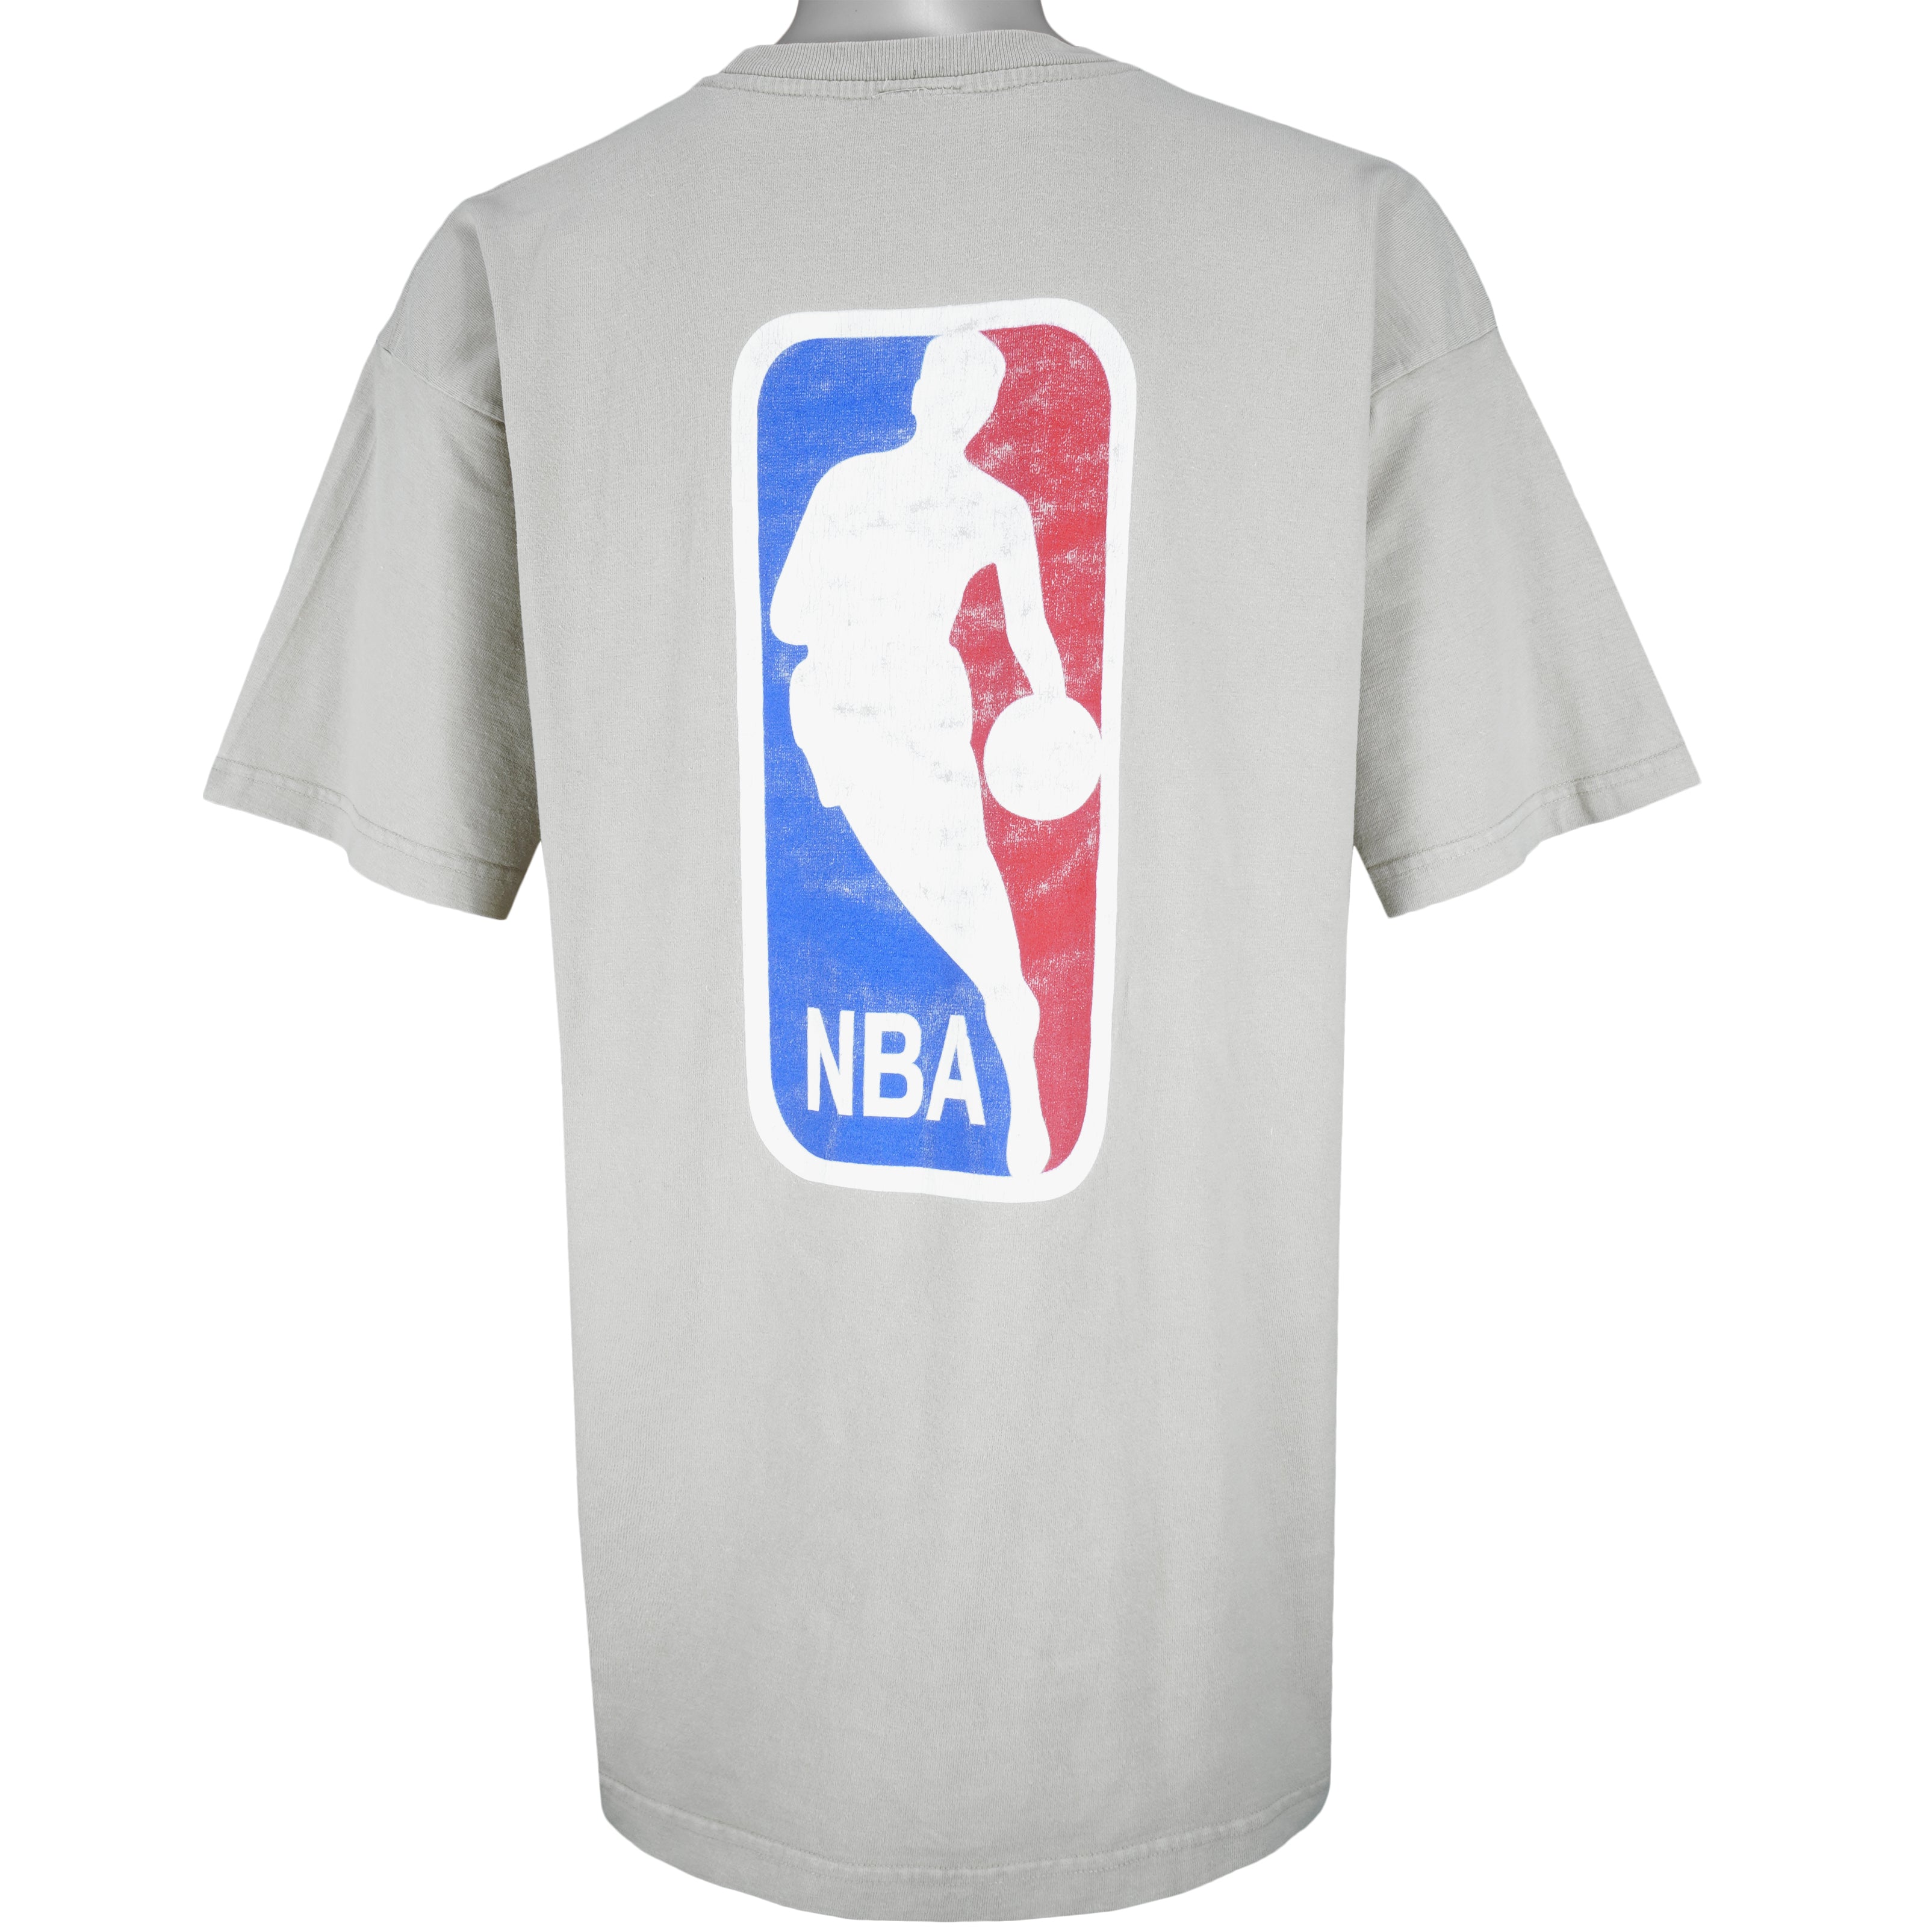 Vintage NBA Adult TShirt XL Team Logos Long Sleeve Cotton Crew Men